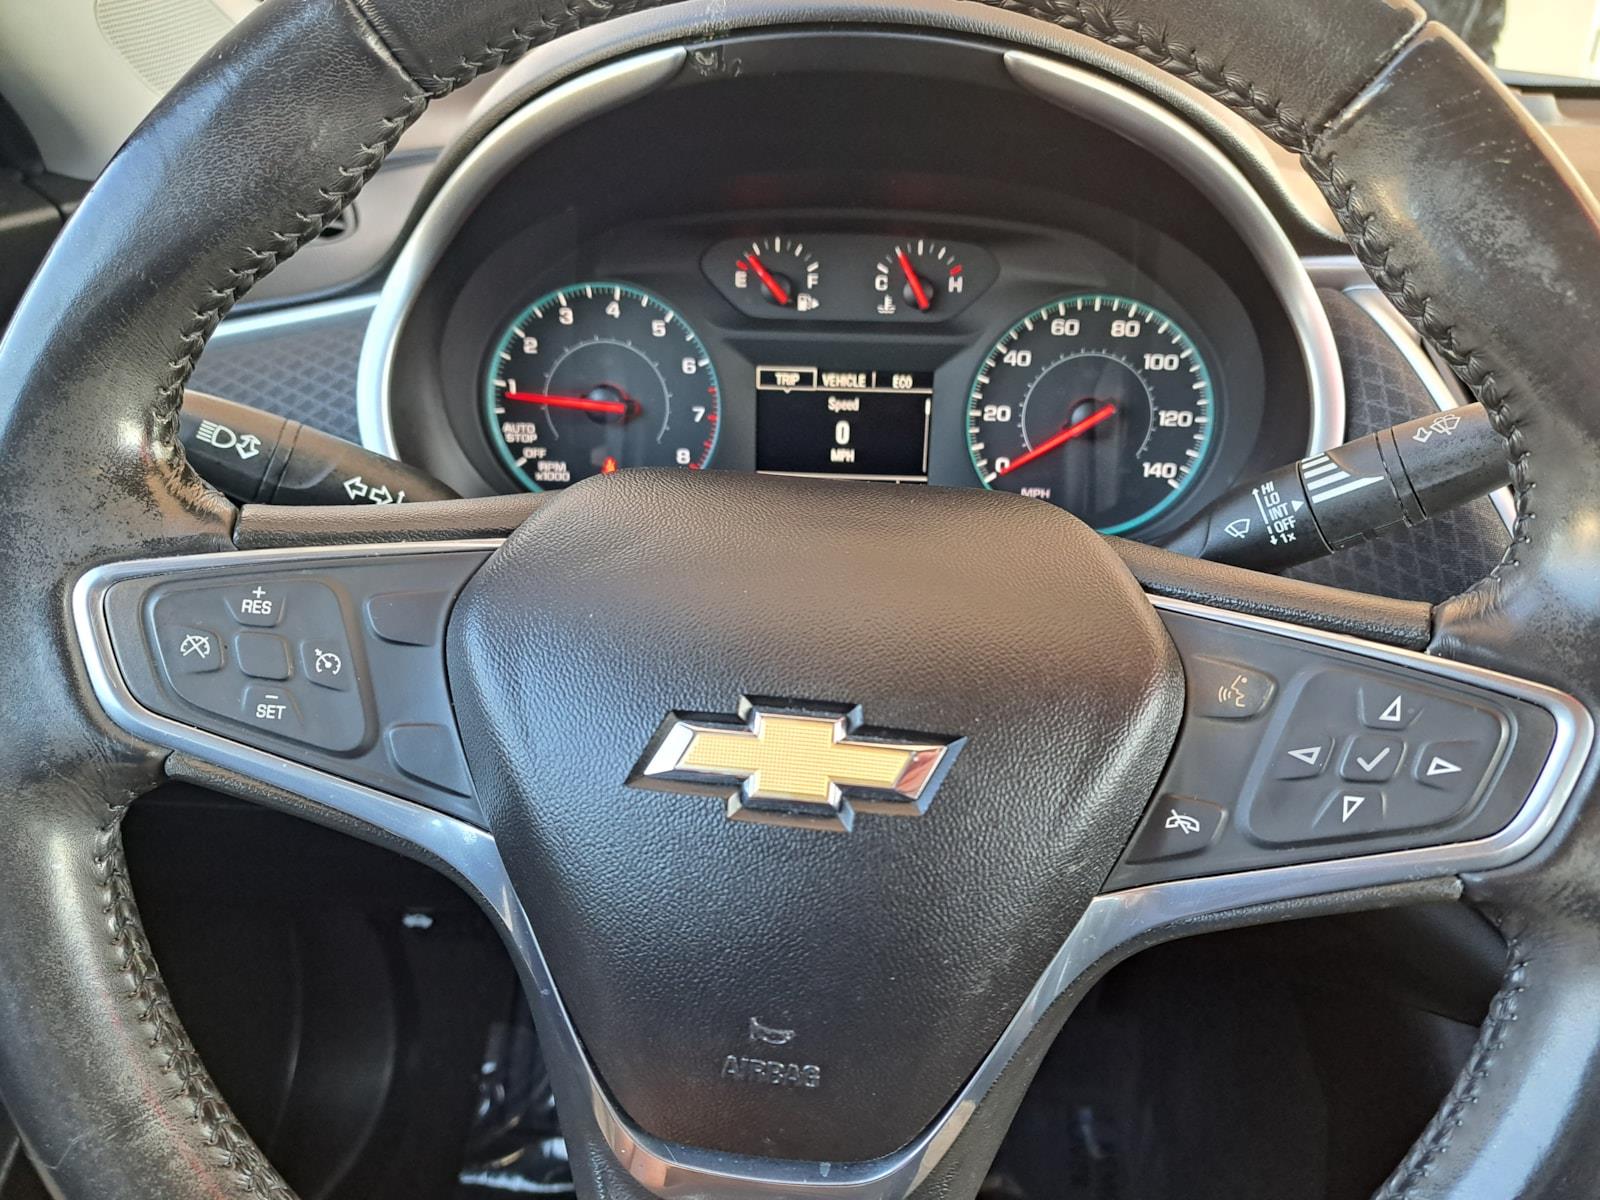 2019 Chevrolet Malibu RS Sedan 4 Dr. Front Wheel Drive 8